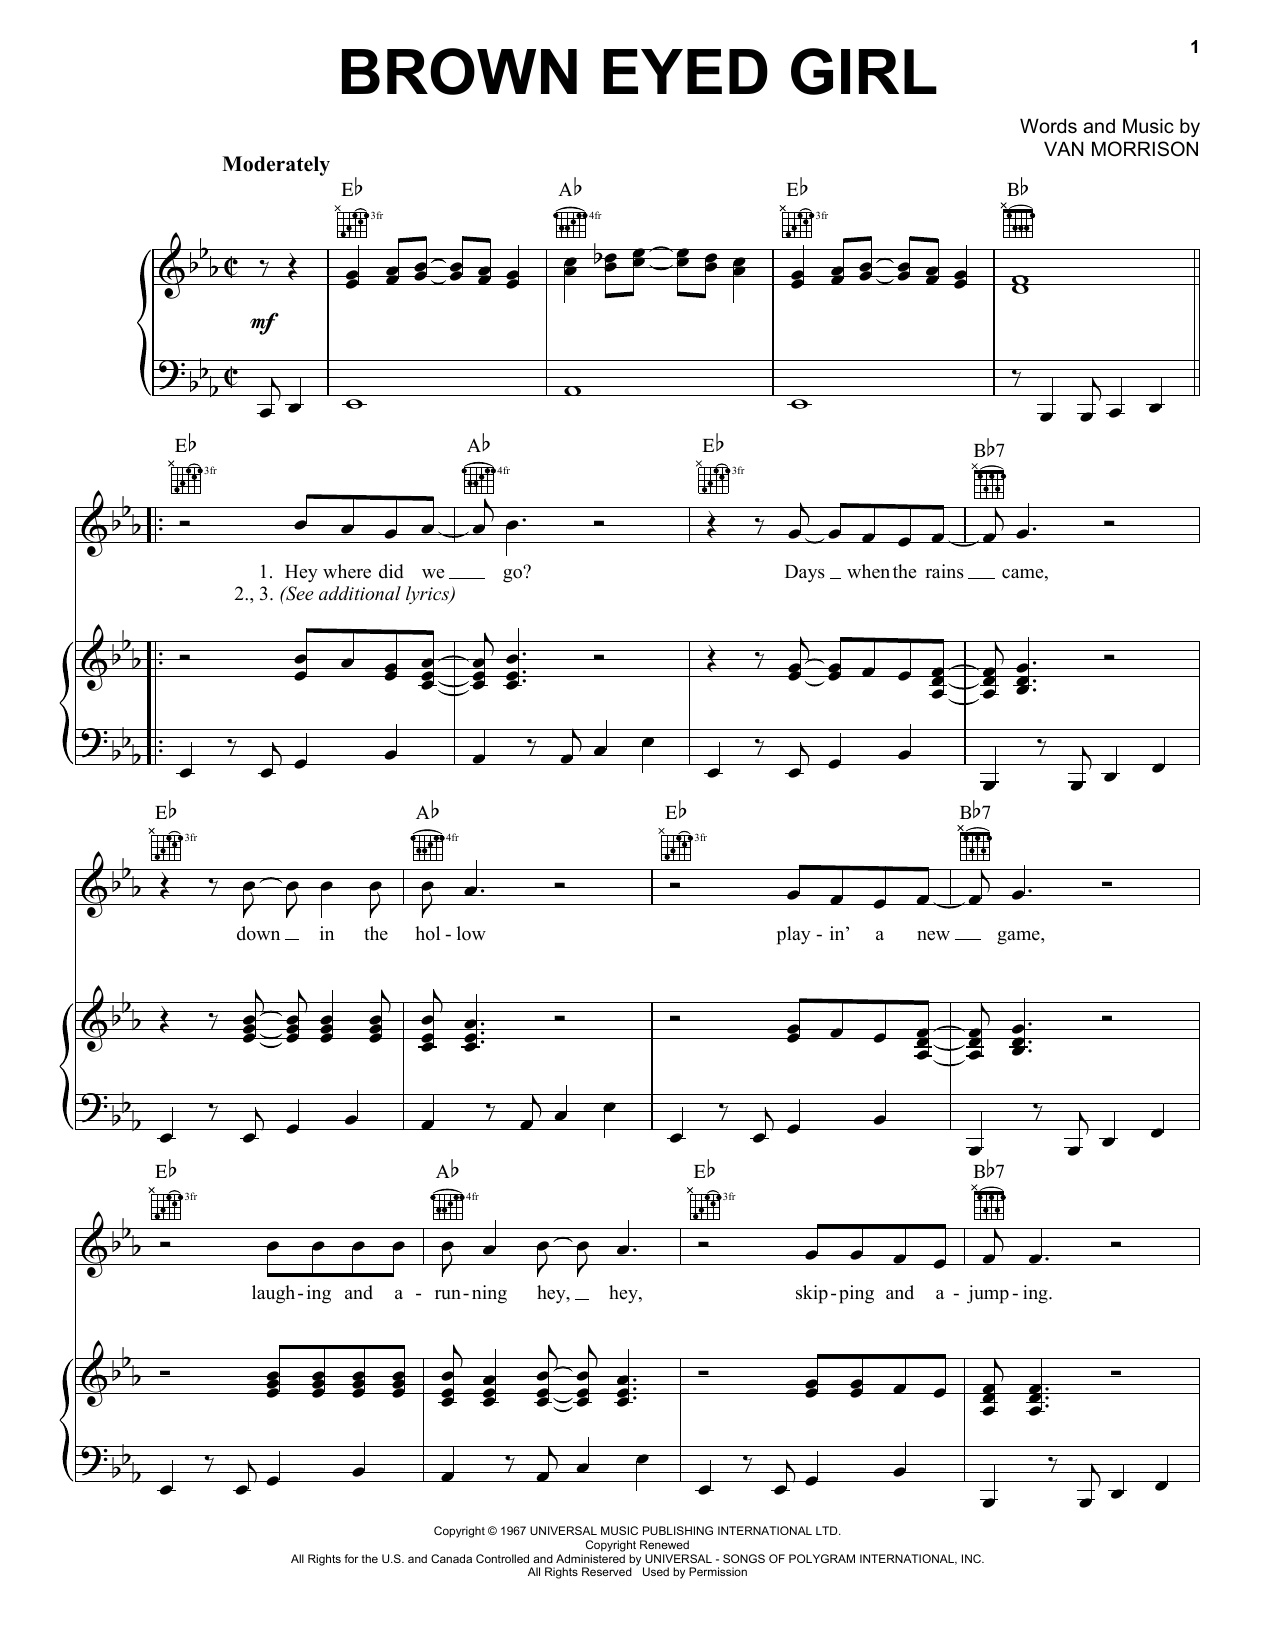 Van Morrison Brown Eyed Girl Sheet Music Notes & Chords for Alto Saxophone - Download or Print PDF